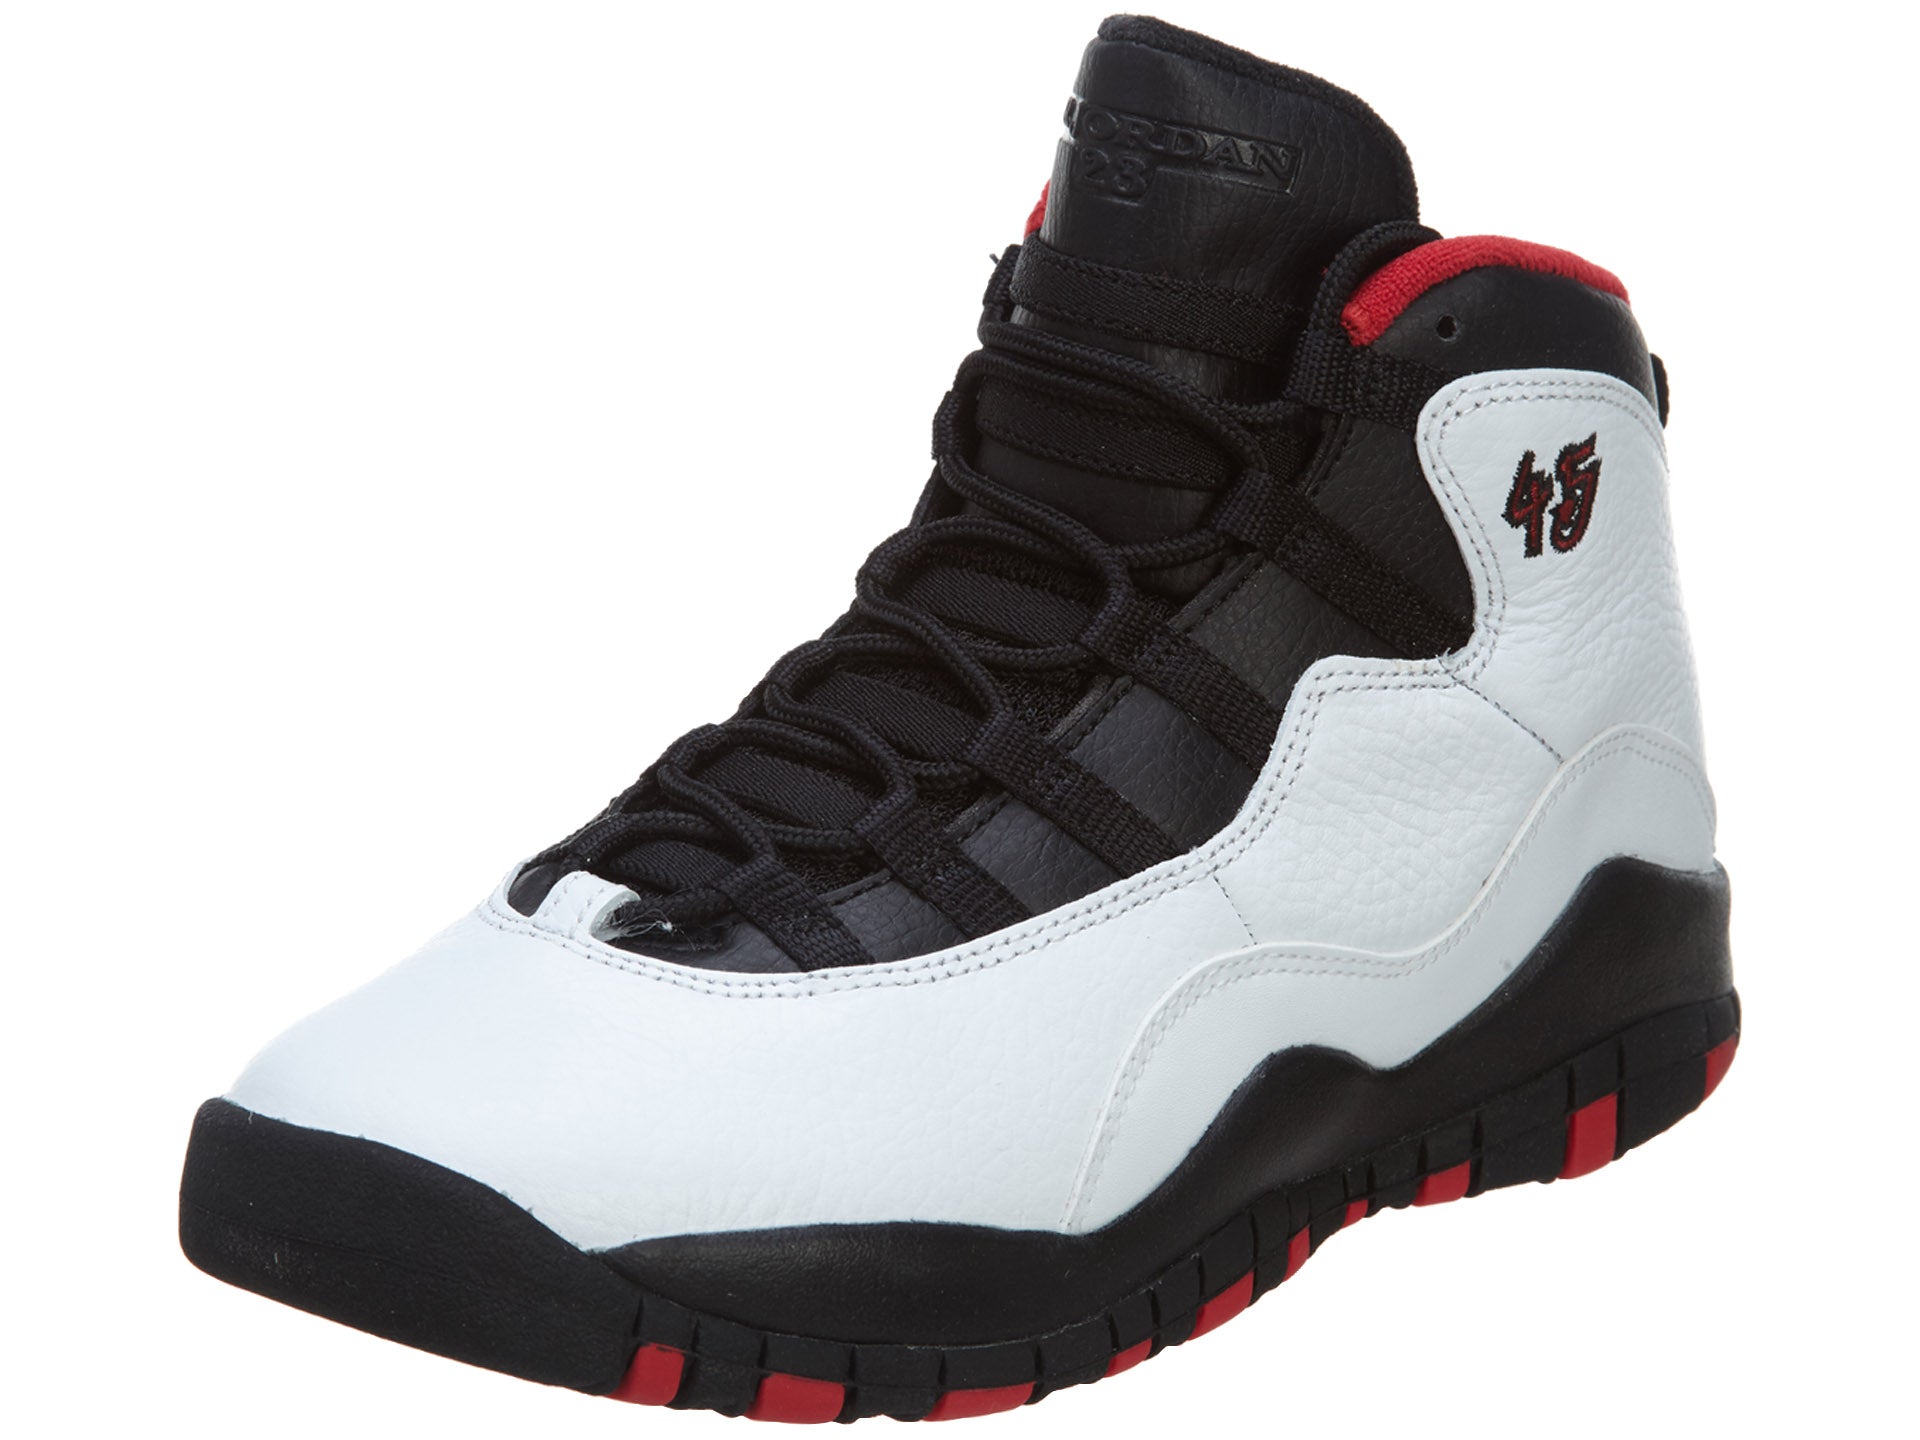 Jordan 10 Retro Double Nickel Big Kids Basketball Shoes Sneaker Style : 310806-102